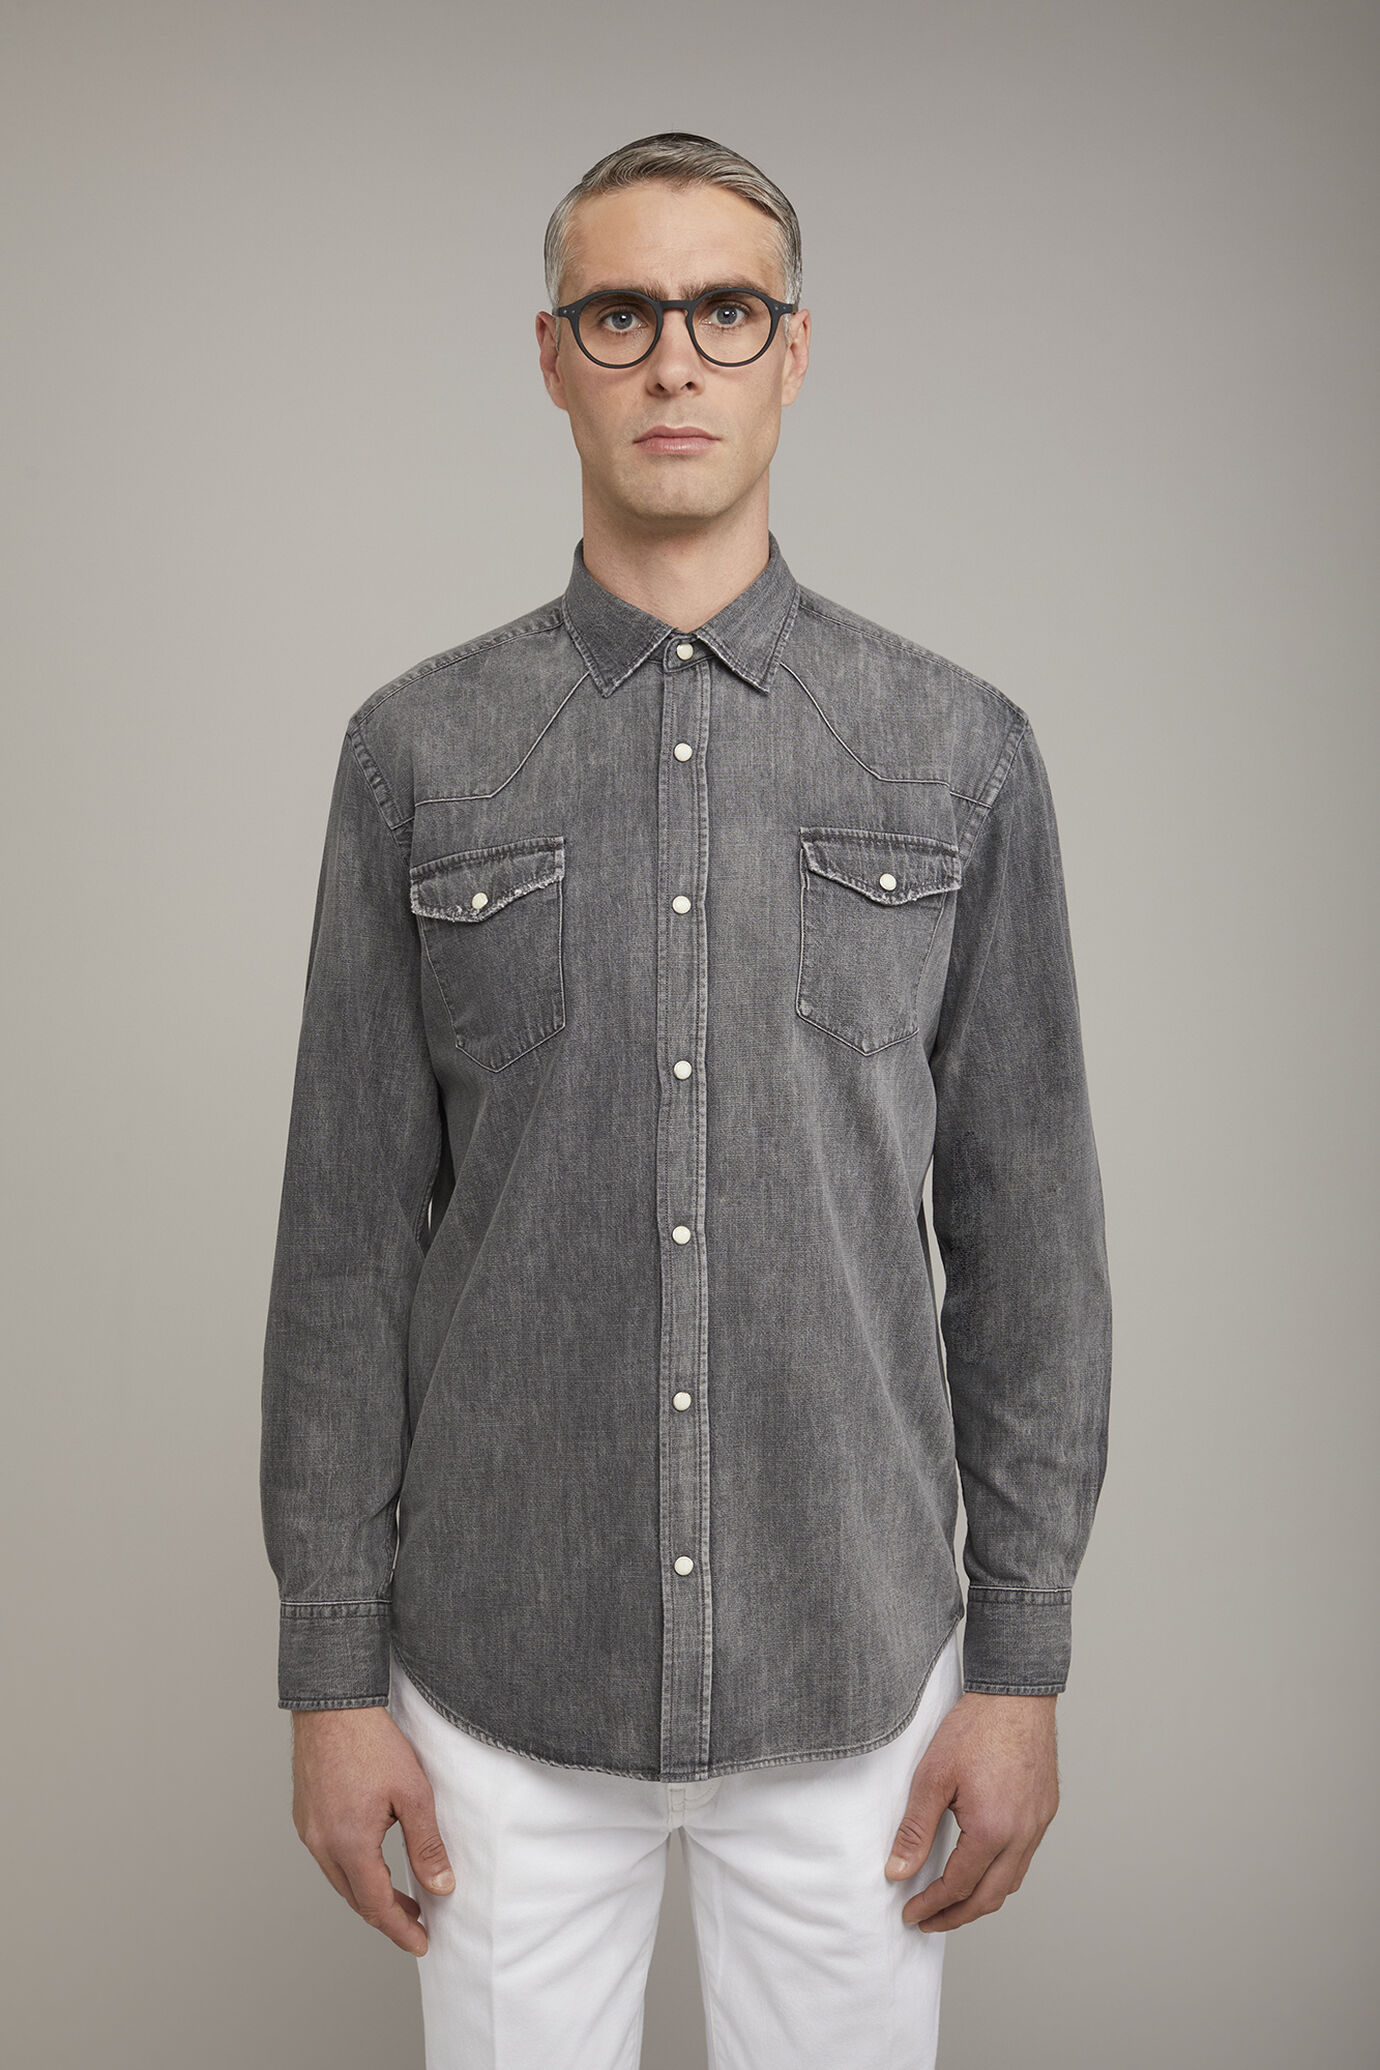 Men’s casual shirt classic collar 100% cotton denim fabric comfort fit image number 2